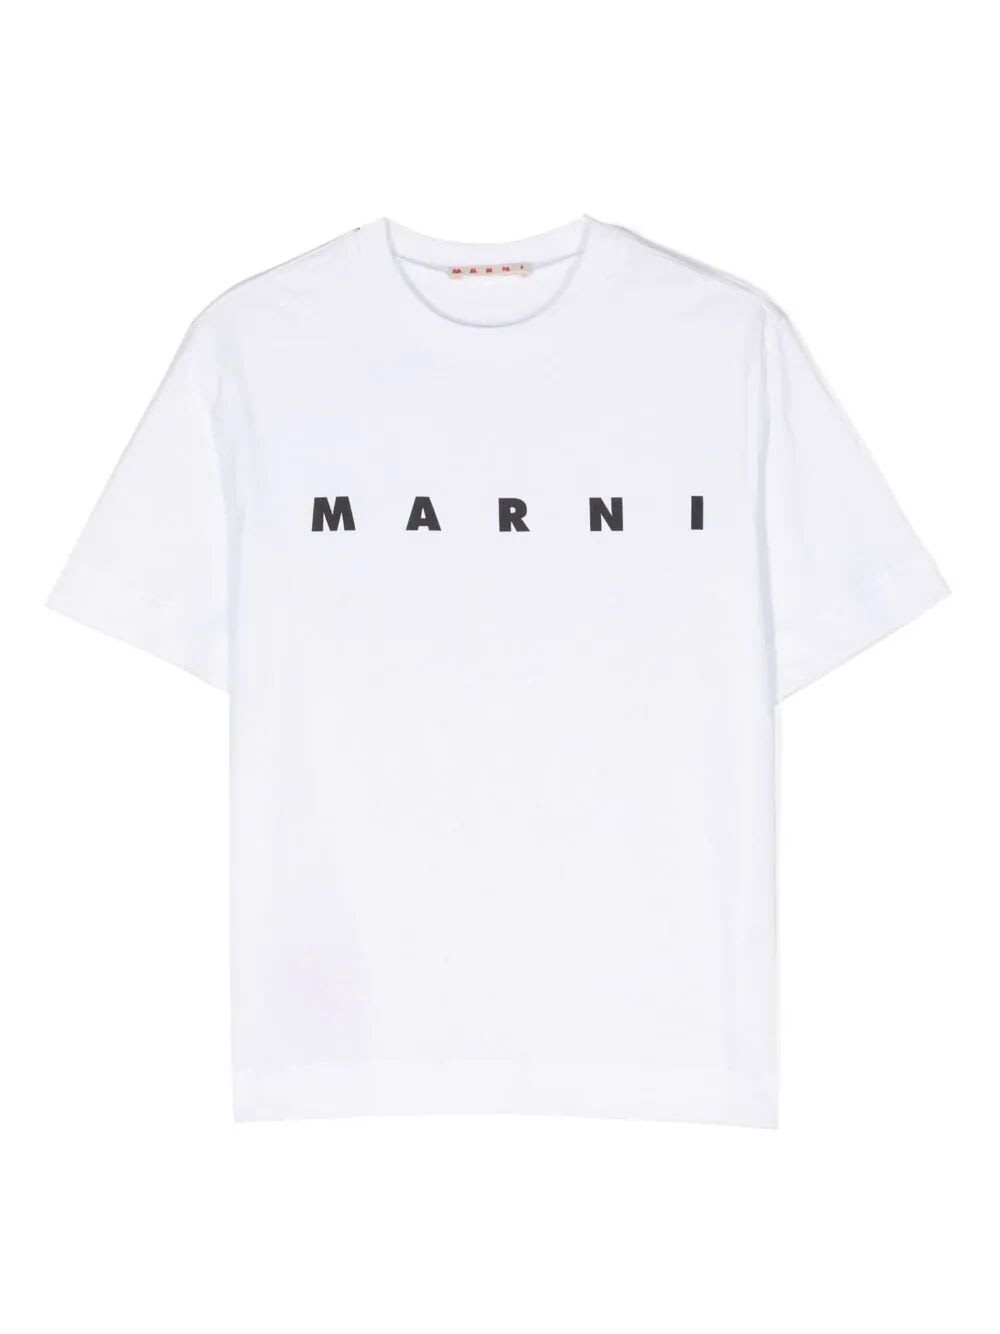 MARNI MT135U T-SHIRT